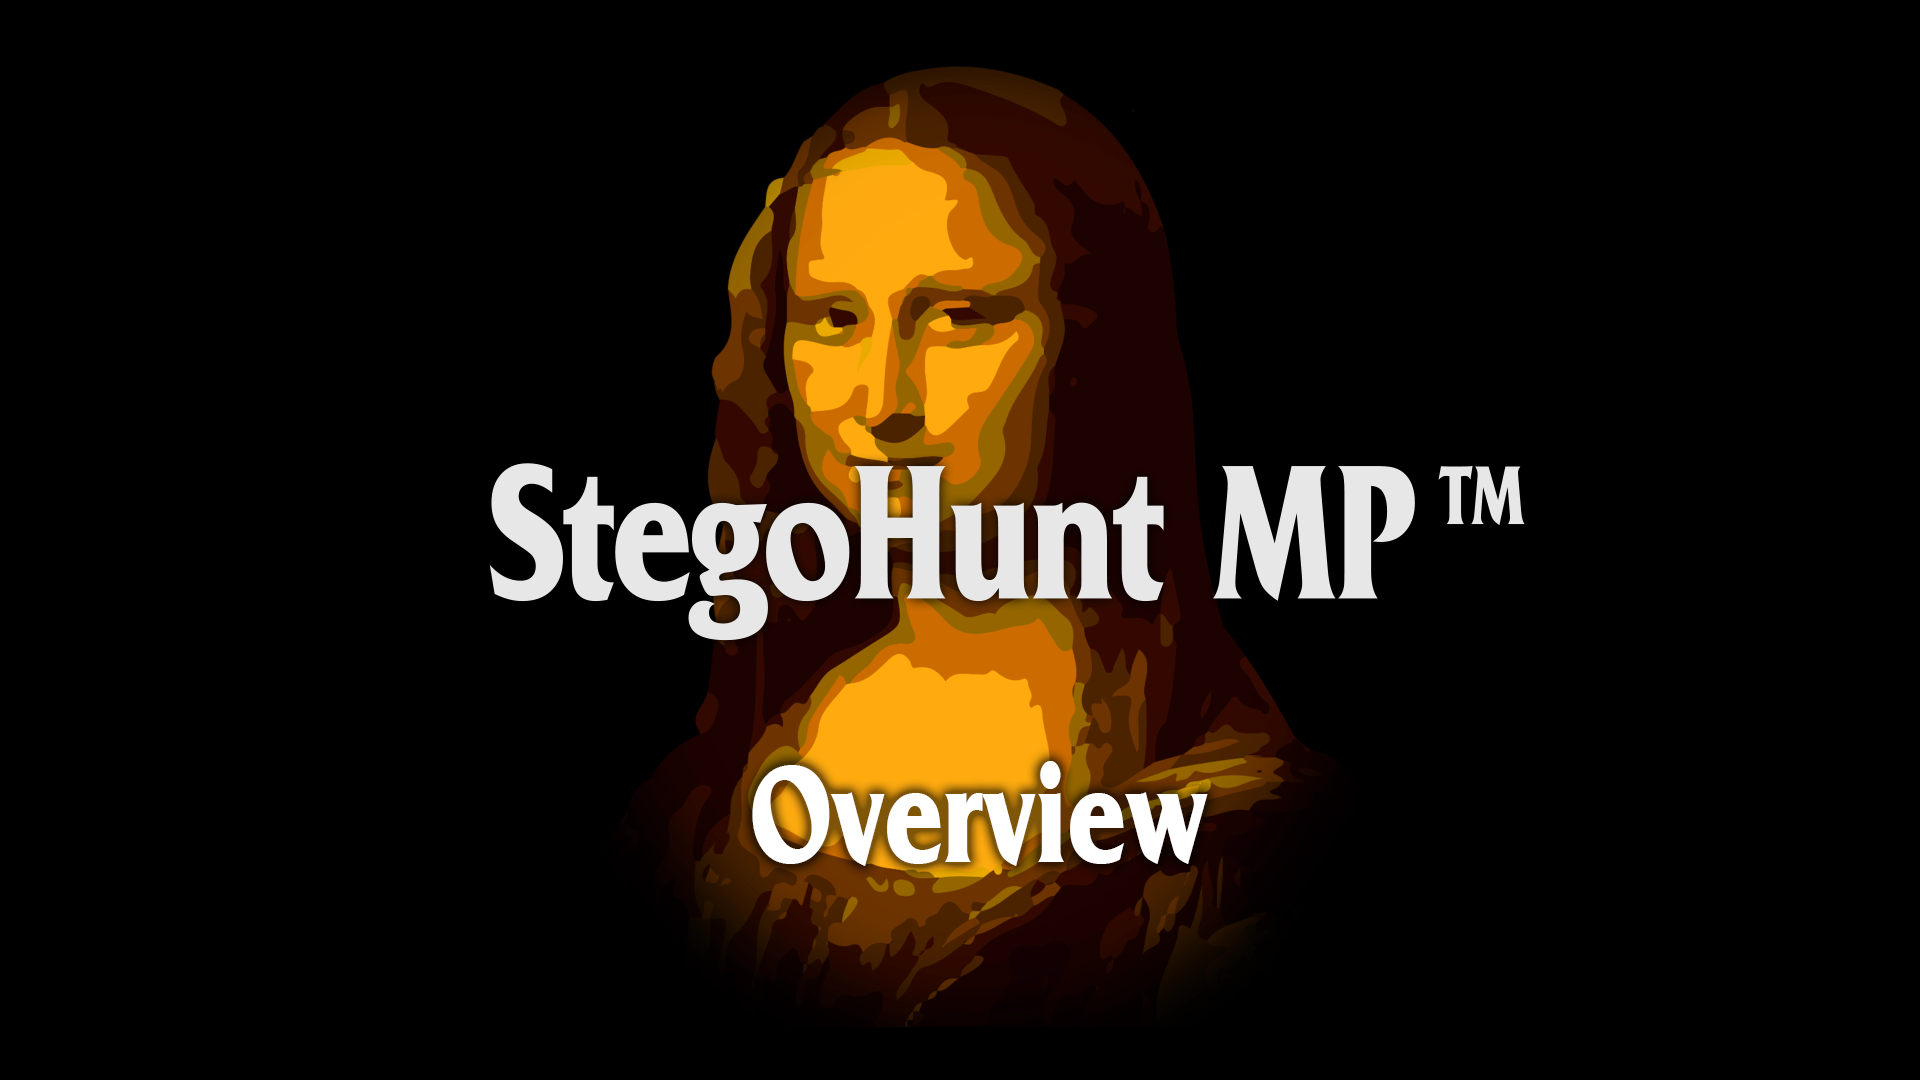 StegoHunt MP: Overview